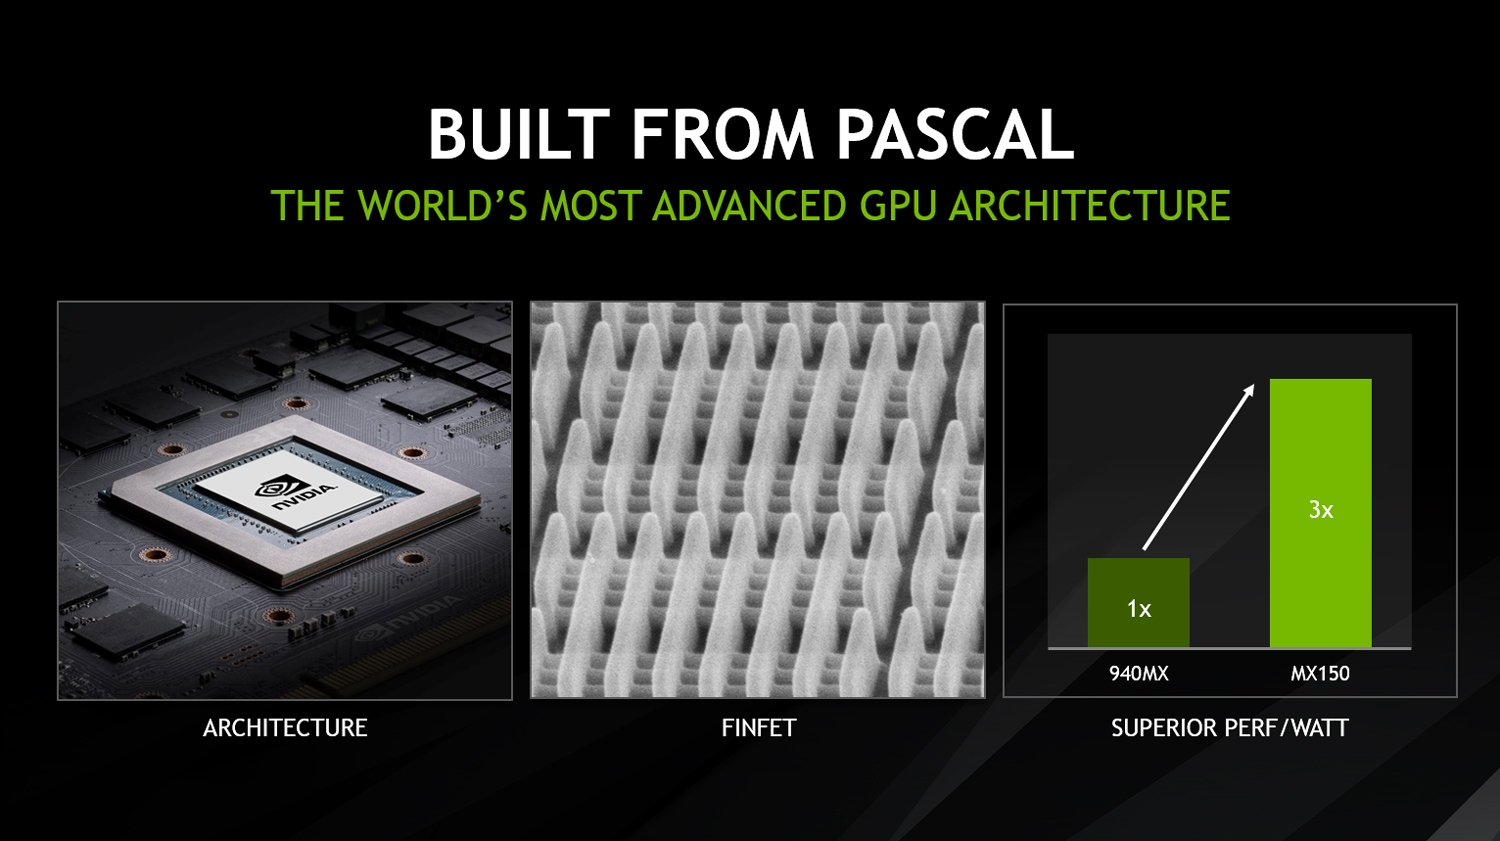 NVIDIA анонсировала GPU GeForce MX150 для ноутбуков - «Новости сети»